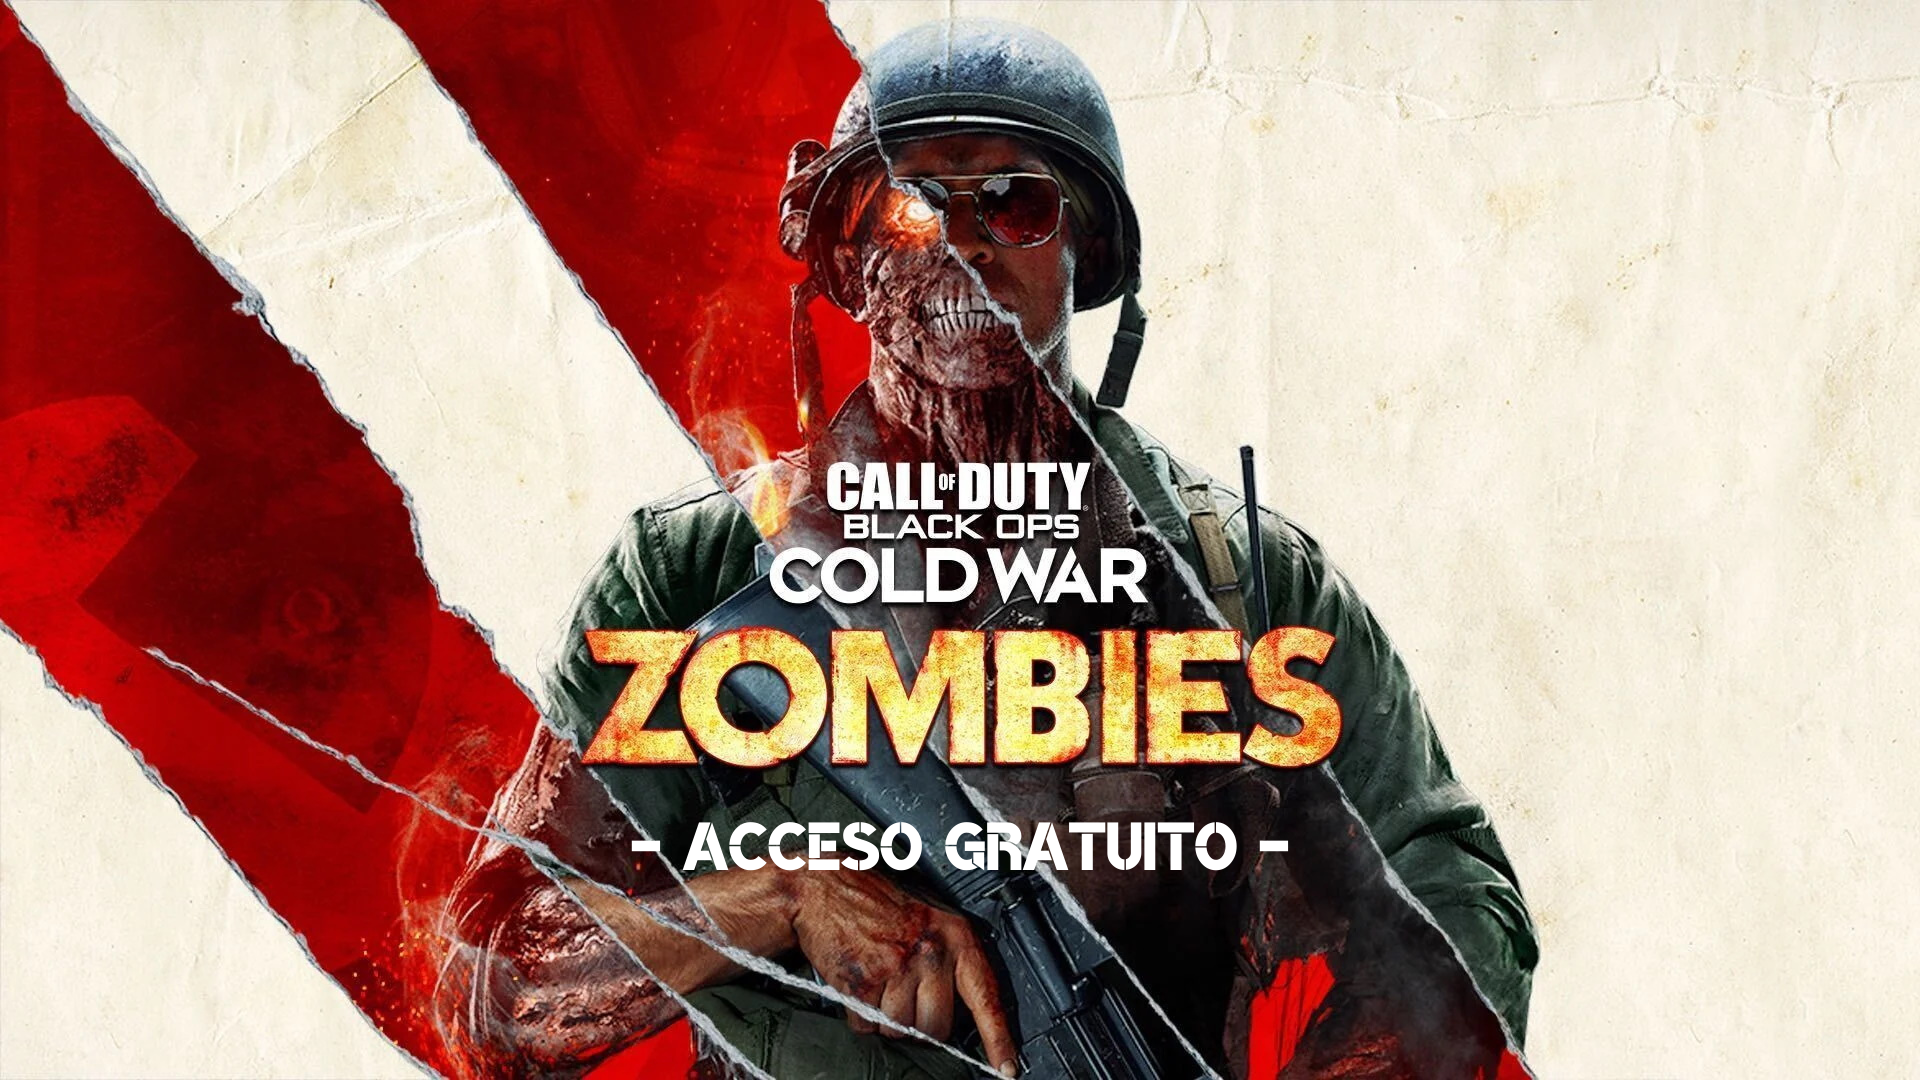 Call of Duty: Black Ops Cold War Zombies será gratis durante estos días